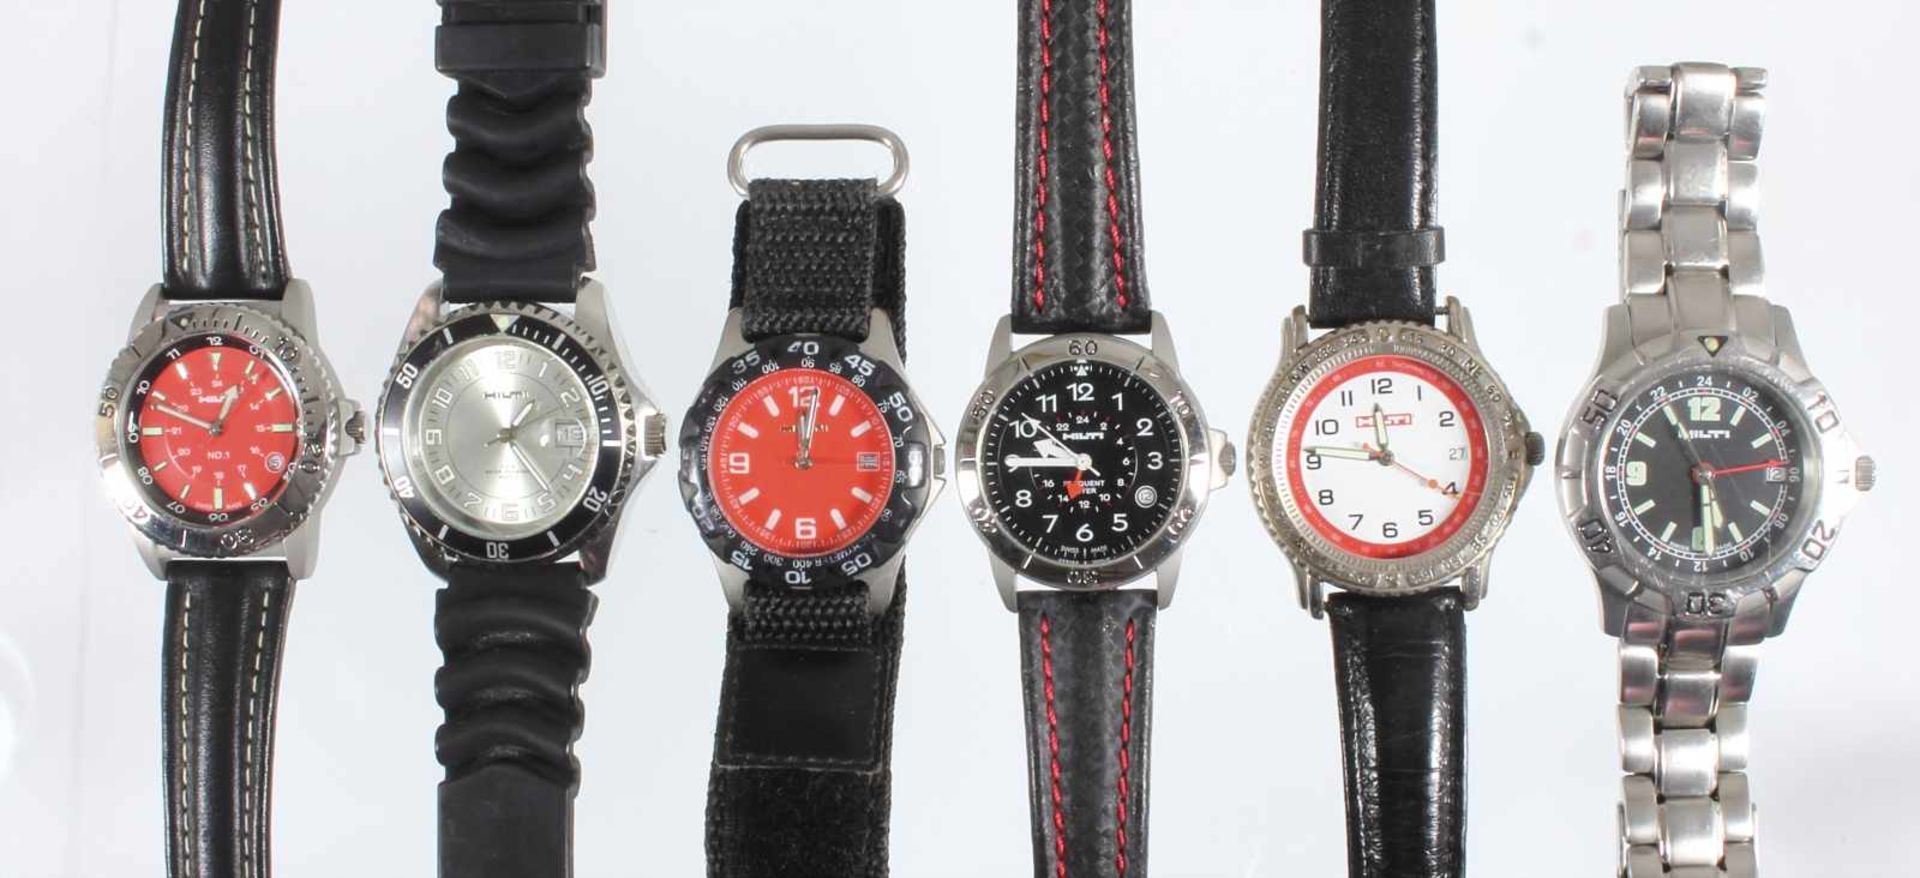 Lot Herren-Armbanduhren: 6 Stück, "HILTI", u. a, Lederband mit Dornschließe, Stahlband mit